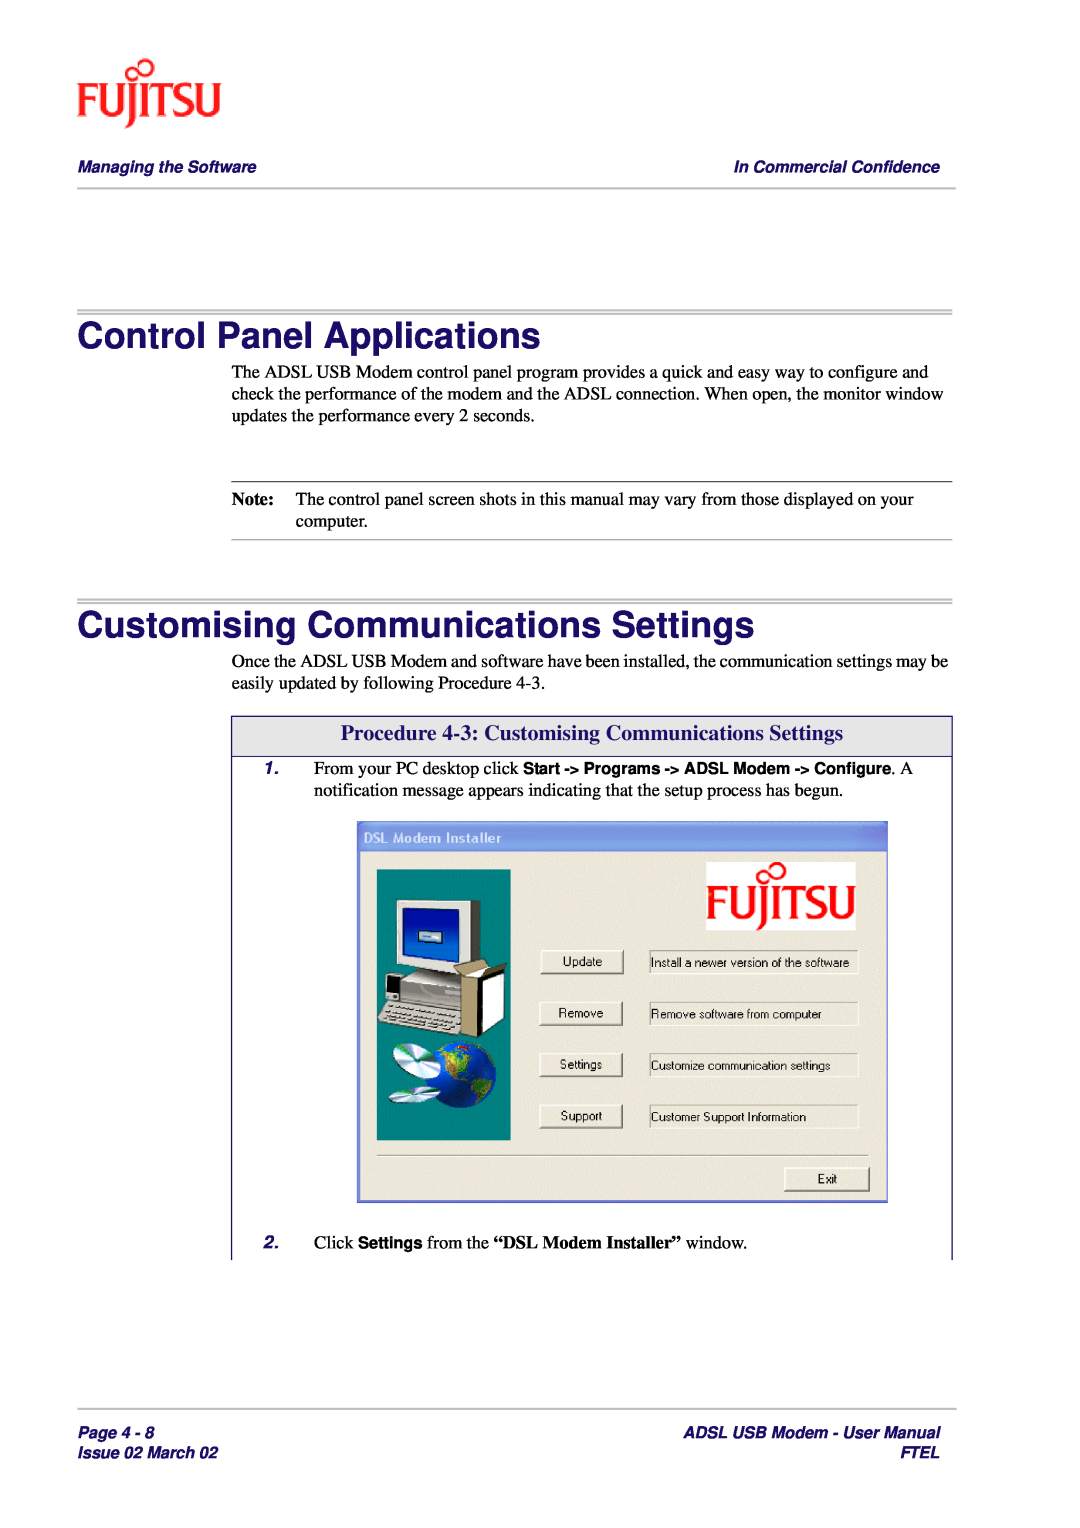 Fujitsu 3XAX-00803AAS user manual Control Panel Applications, Customising Communications Settings 